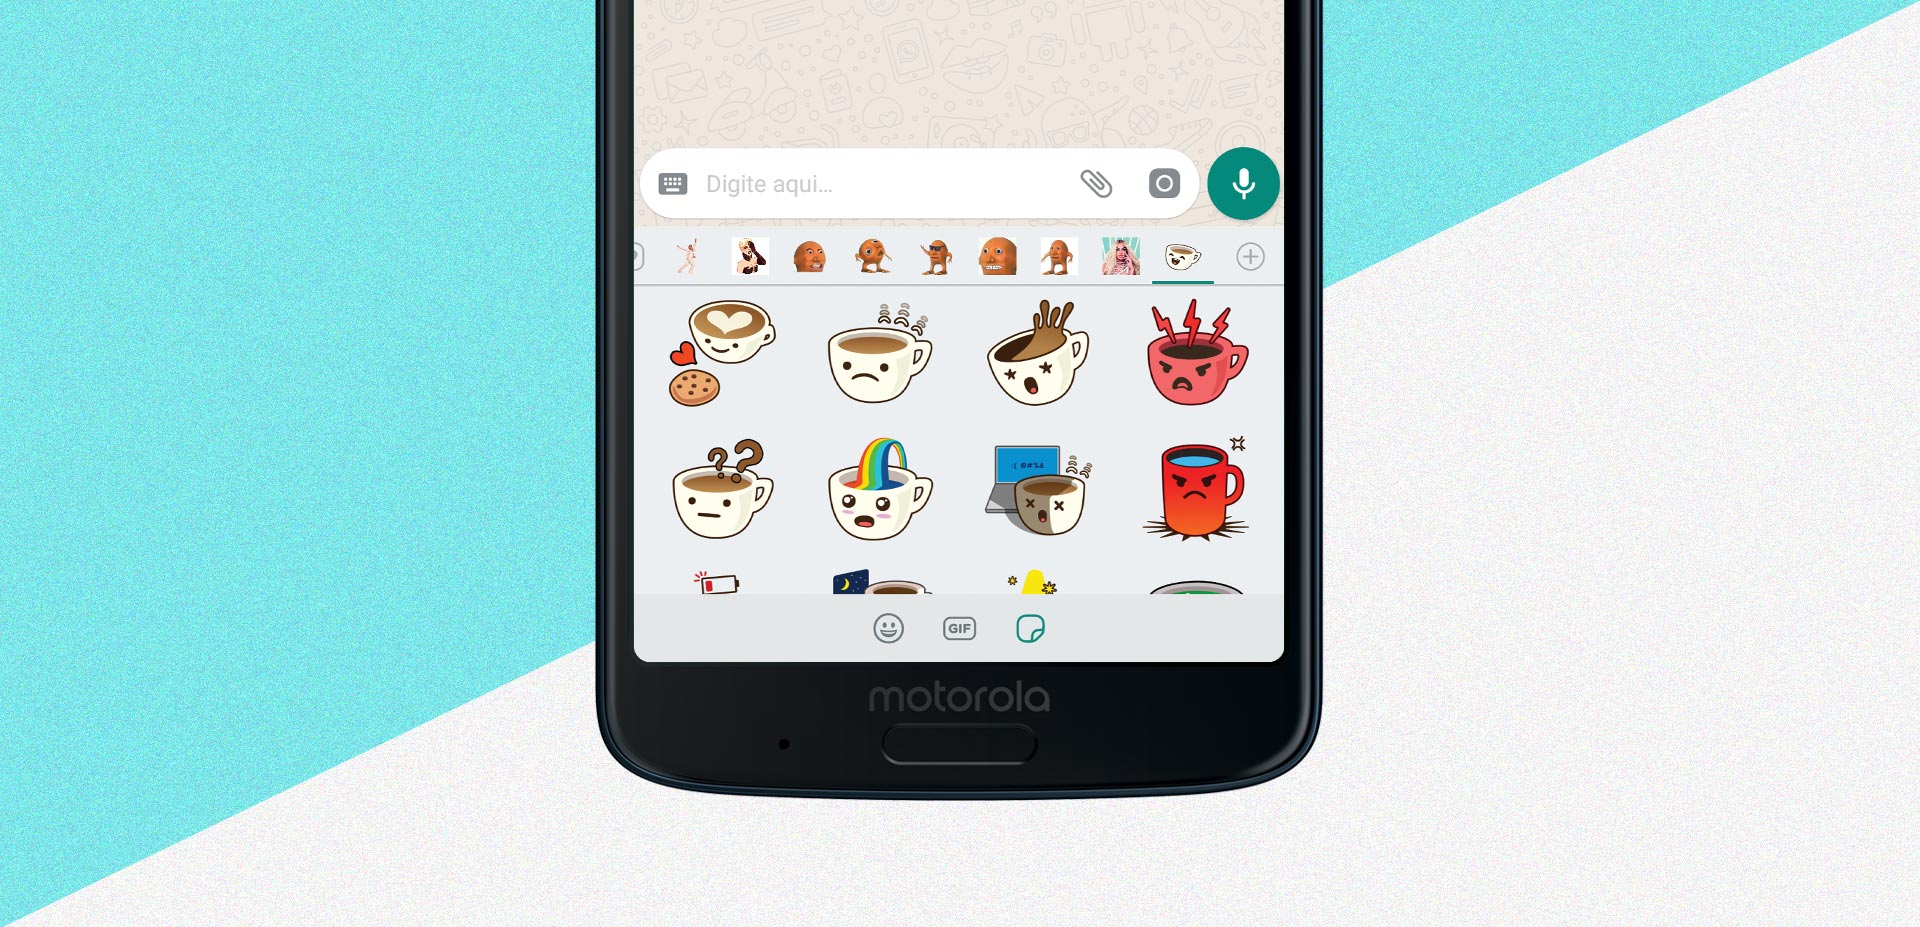 Criando adesivos para o Whatsapp com o seu Motorola - Hello Moto